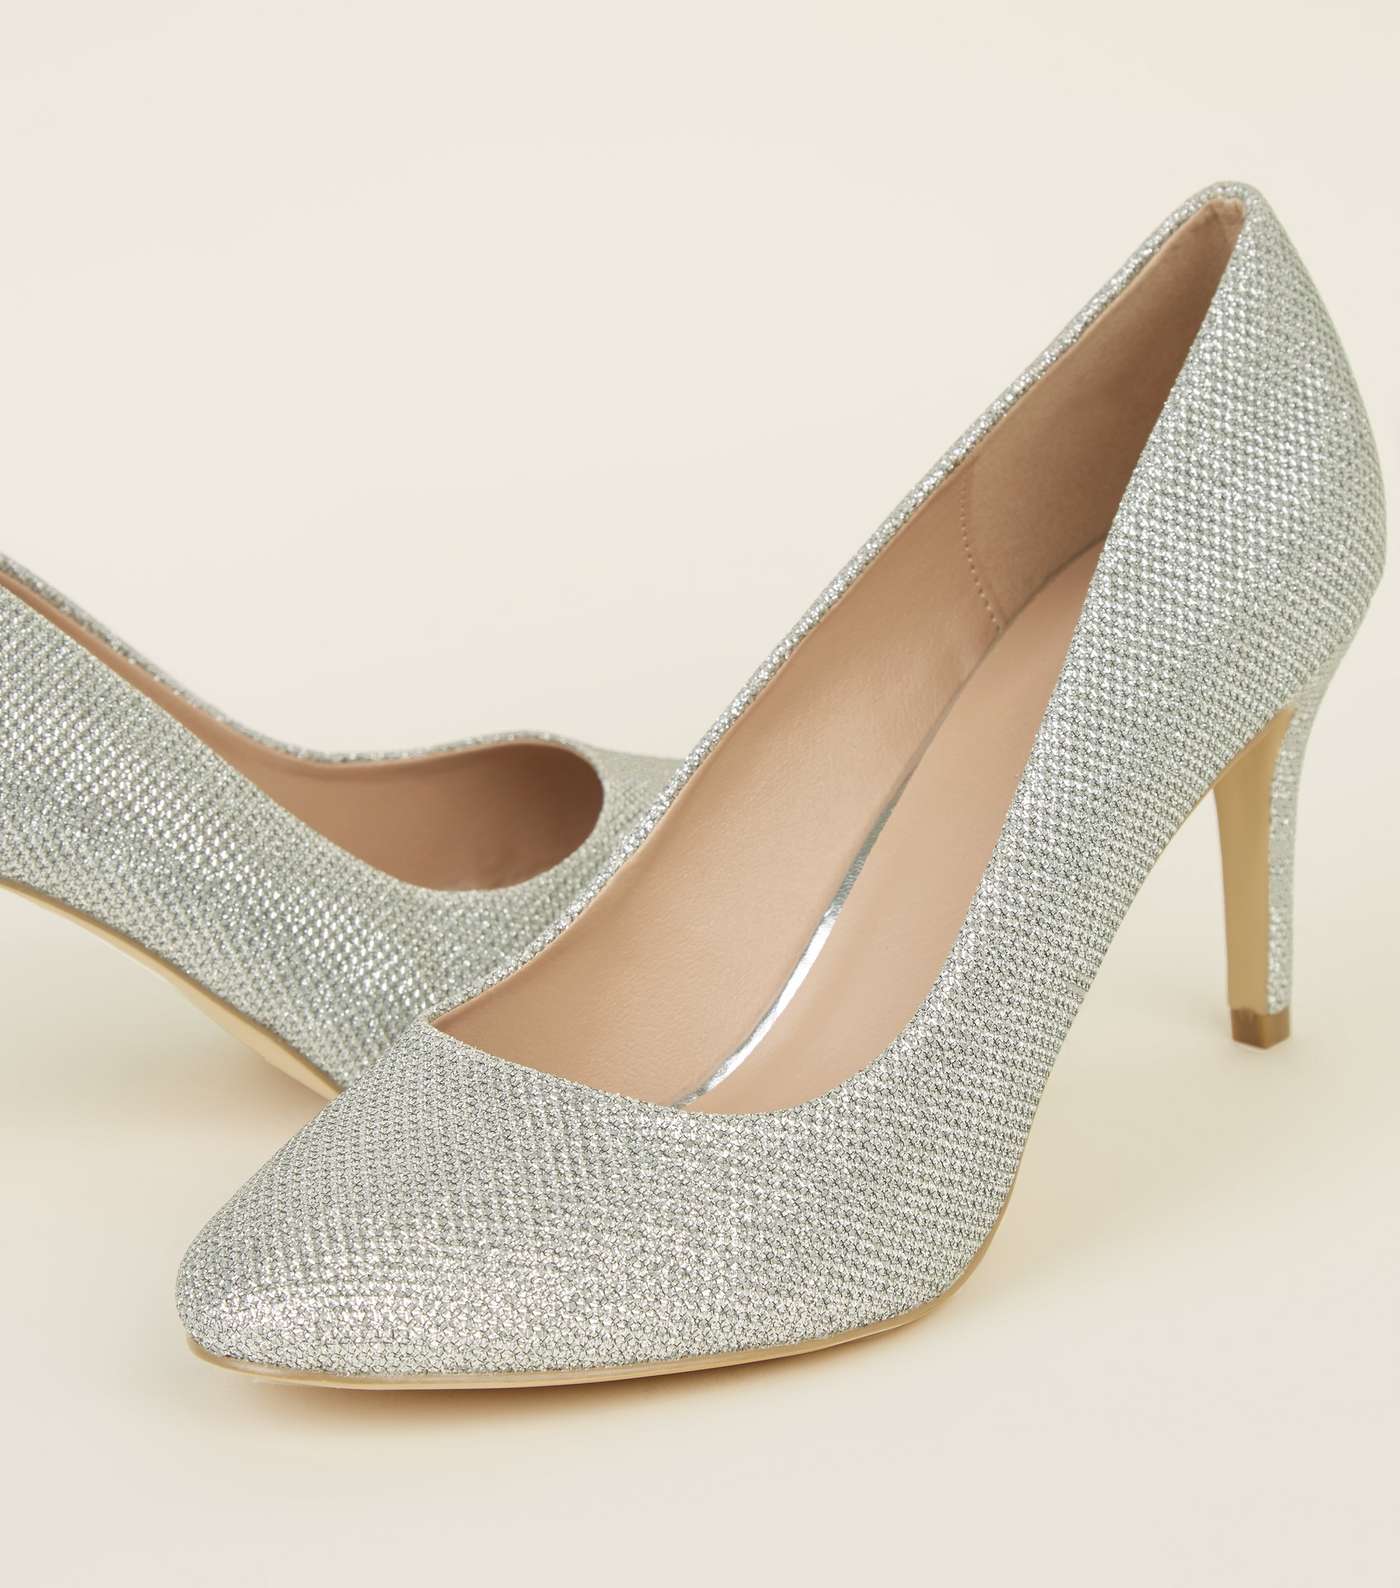 Silver Glitter Stiletto Heel Court Shoes Image 4